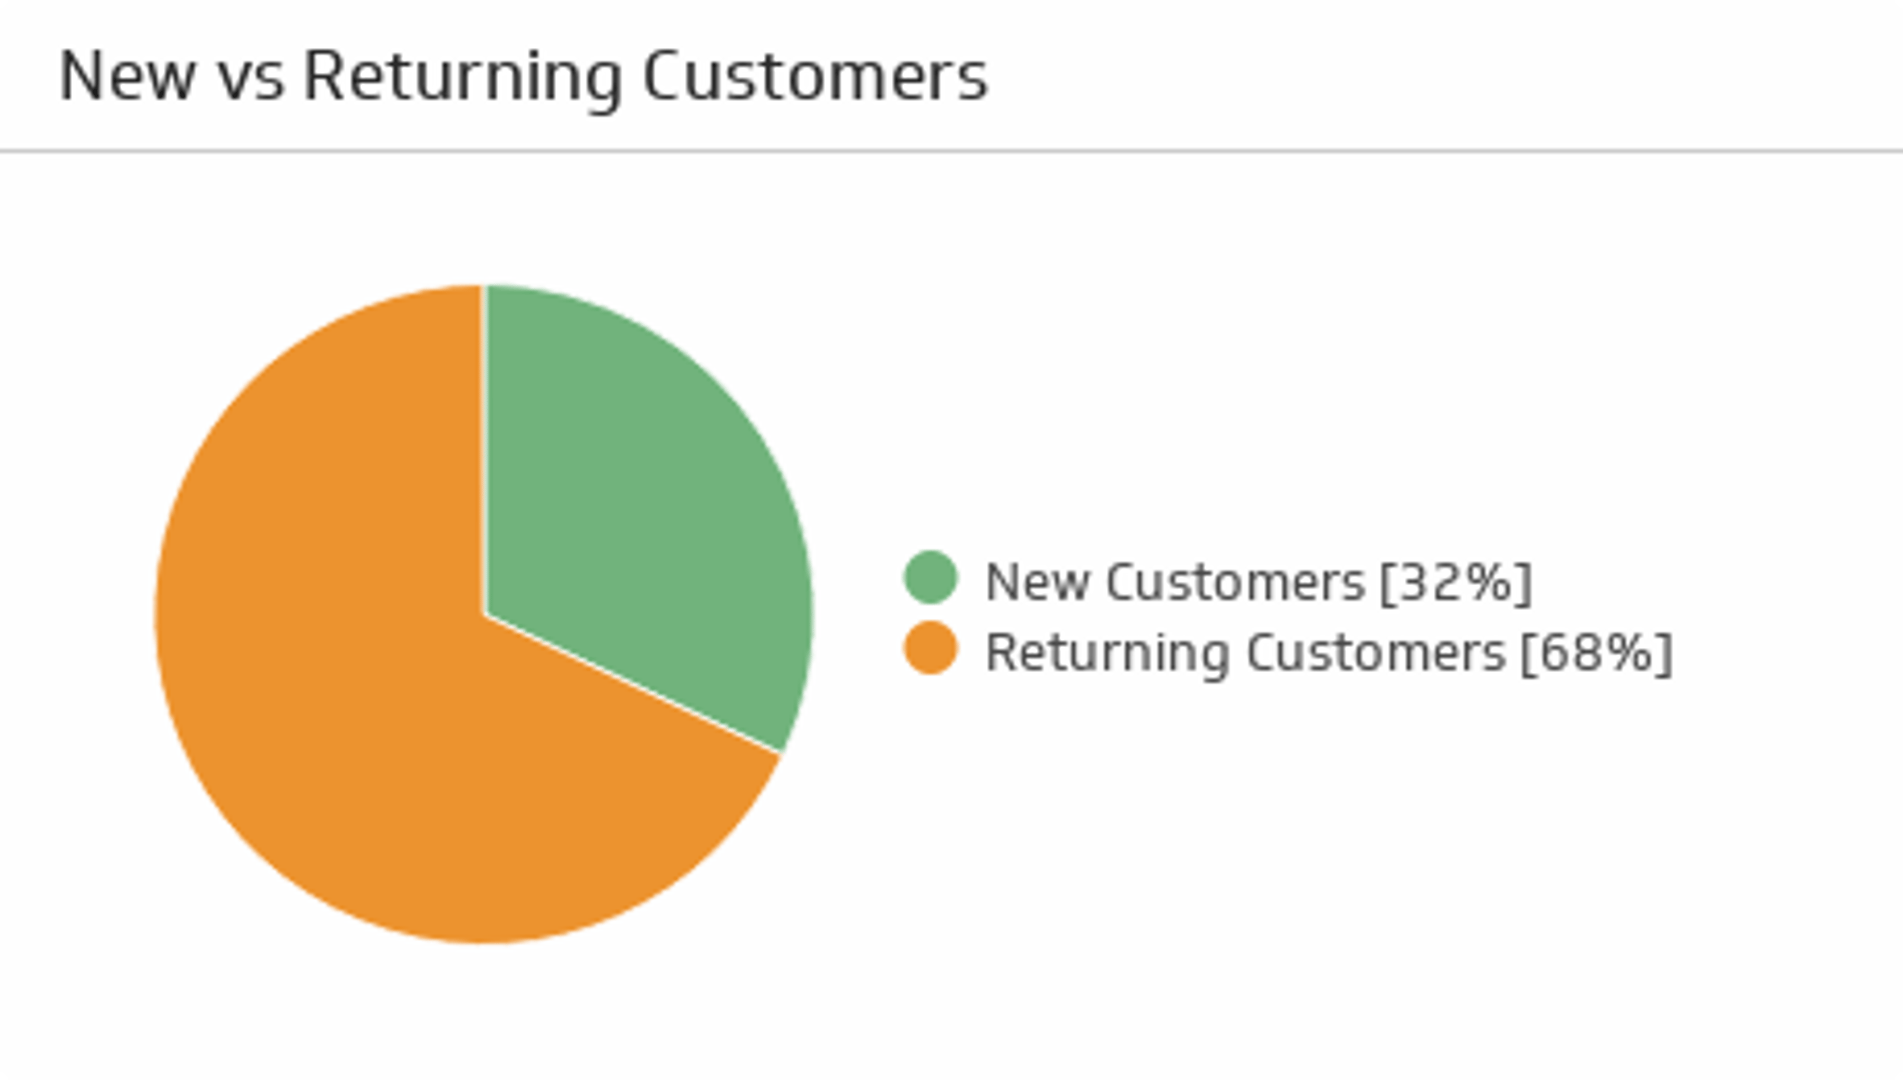 Related KPI Examples - Returning Customers Metric